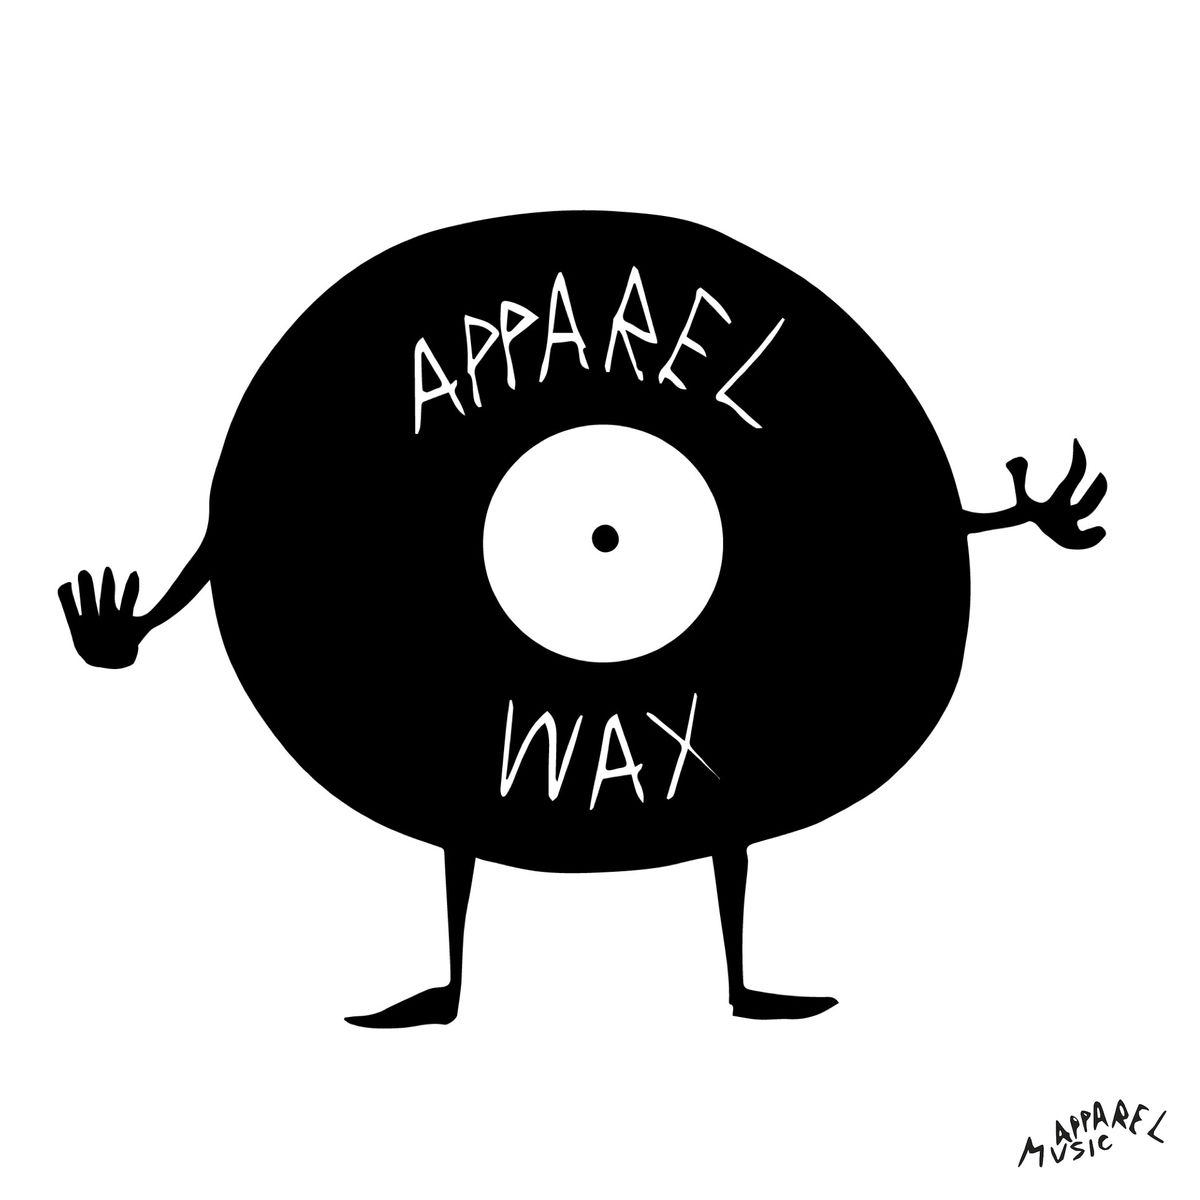 Apparel Wax - 4 / Apparel Music